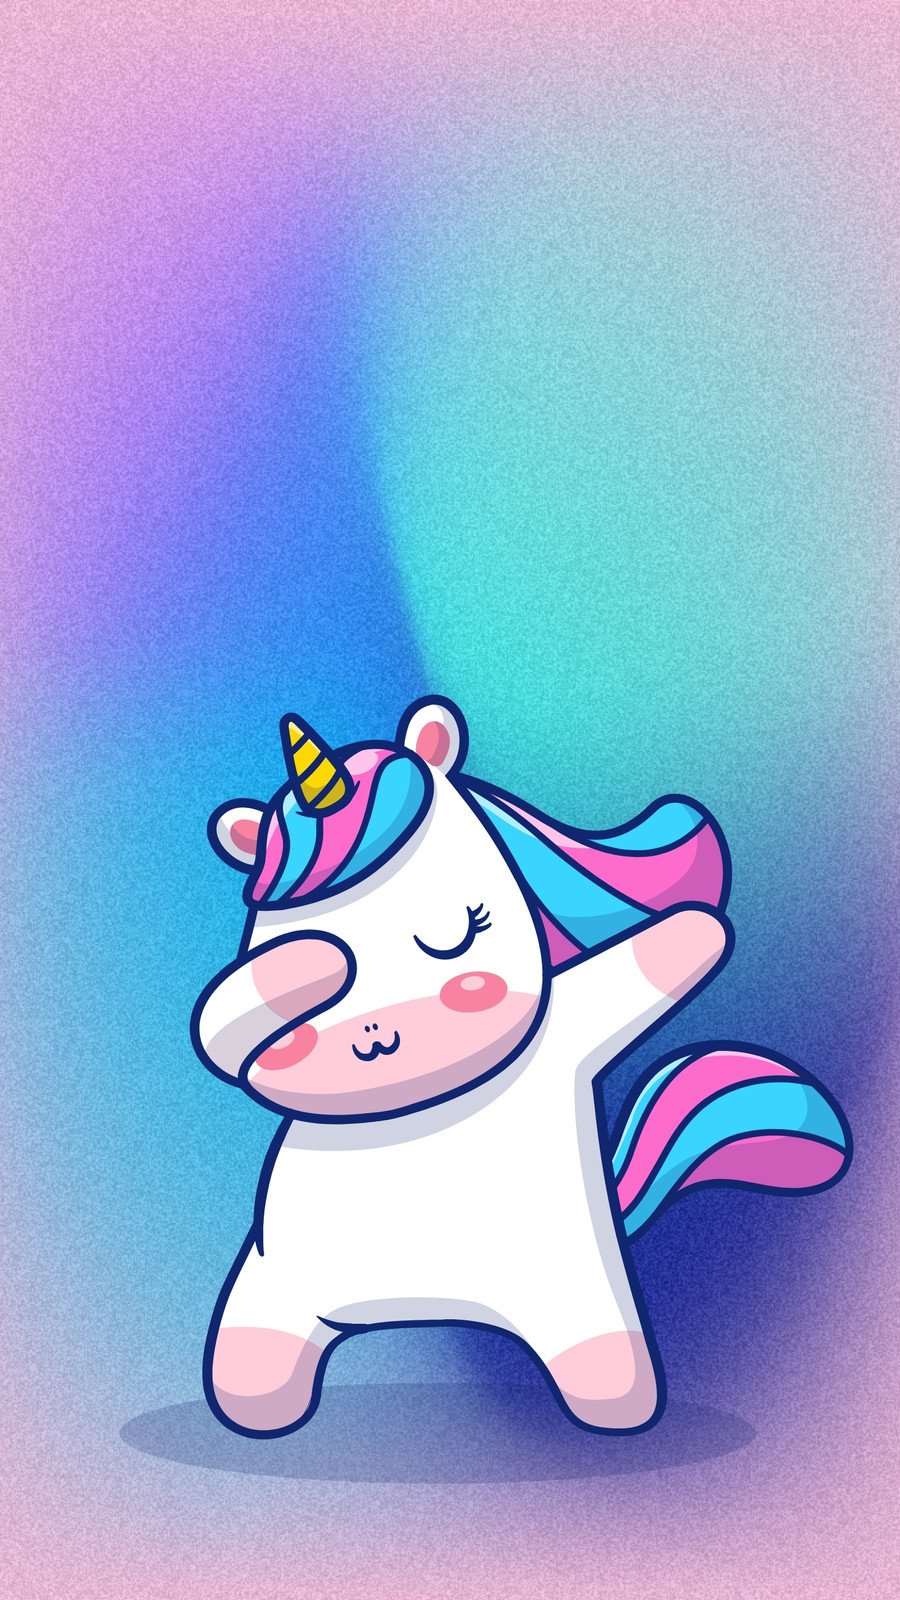 Unicorns and Rainbows Animated Video Invitation - Cool Video